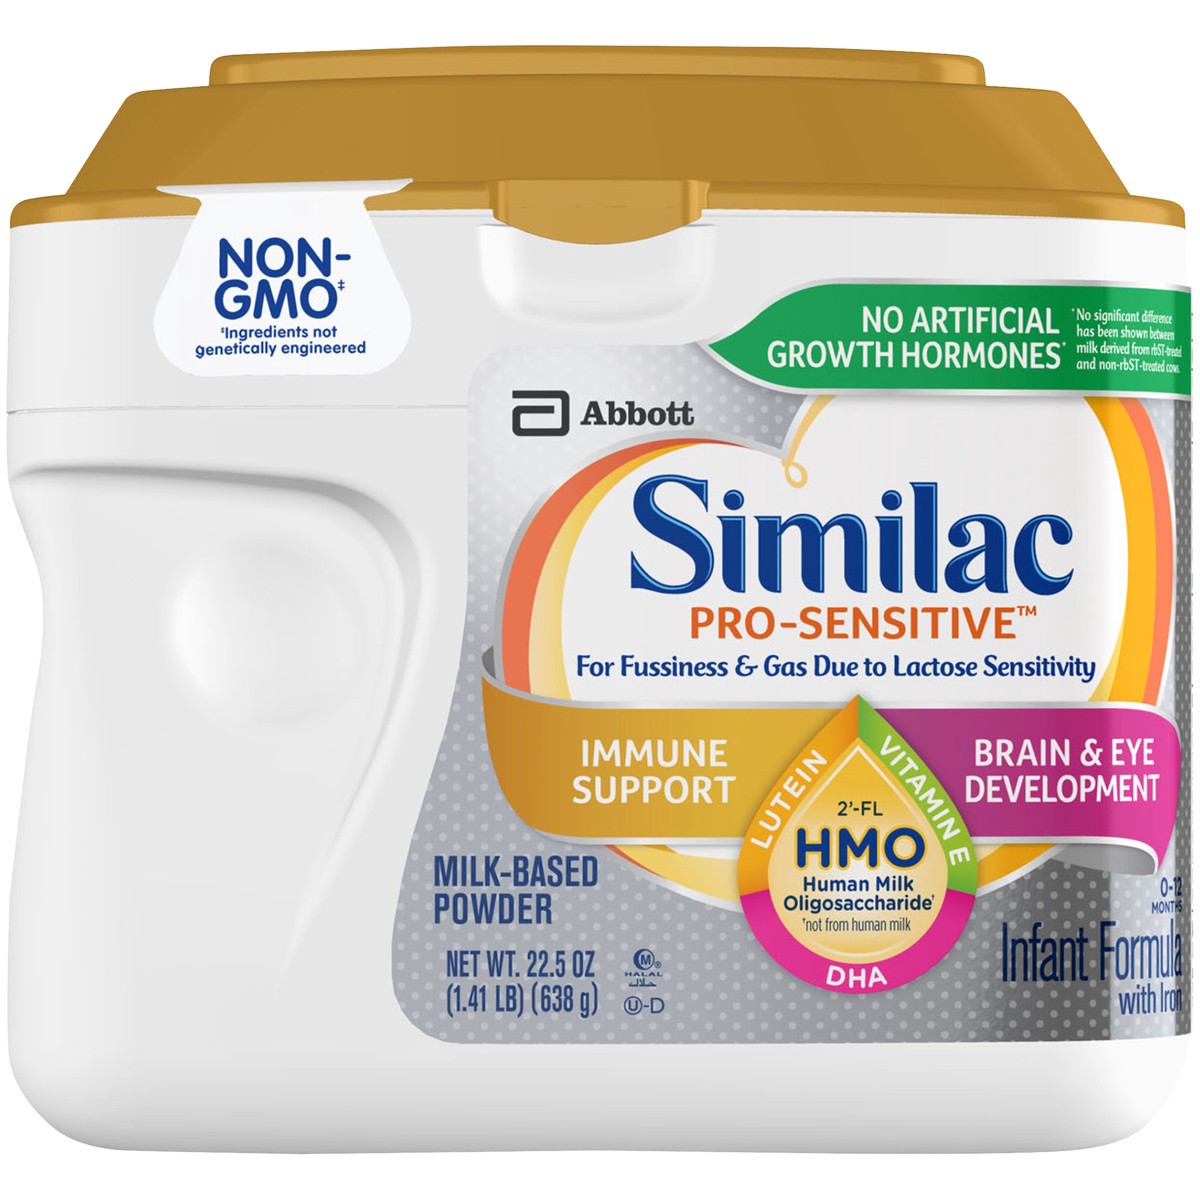 slide 2 of 14, Similac Pro-Sensitive Infant Formula with 2''-FL Human Milk Oligosaccharide* (HMO) for Immune Support, 22.5 ounces, 22.5 oz